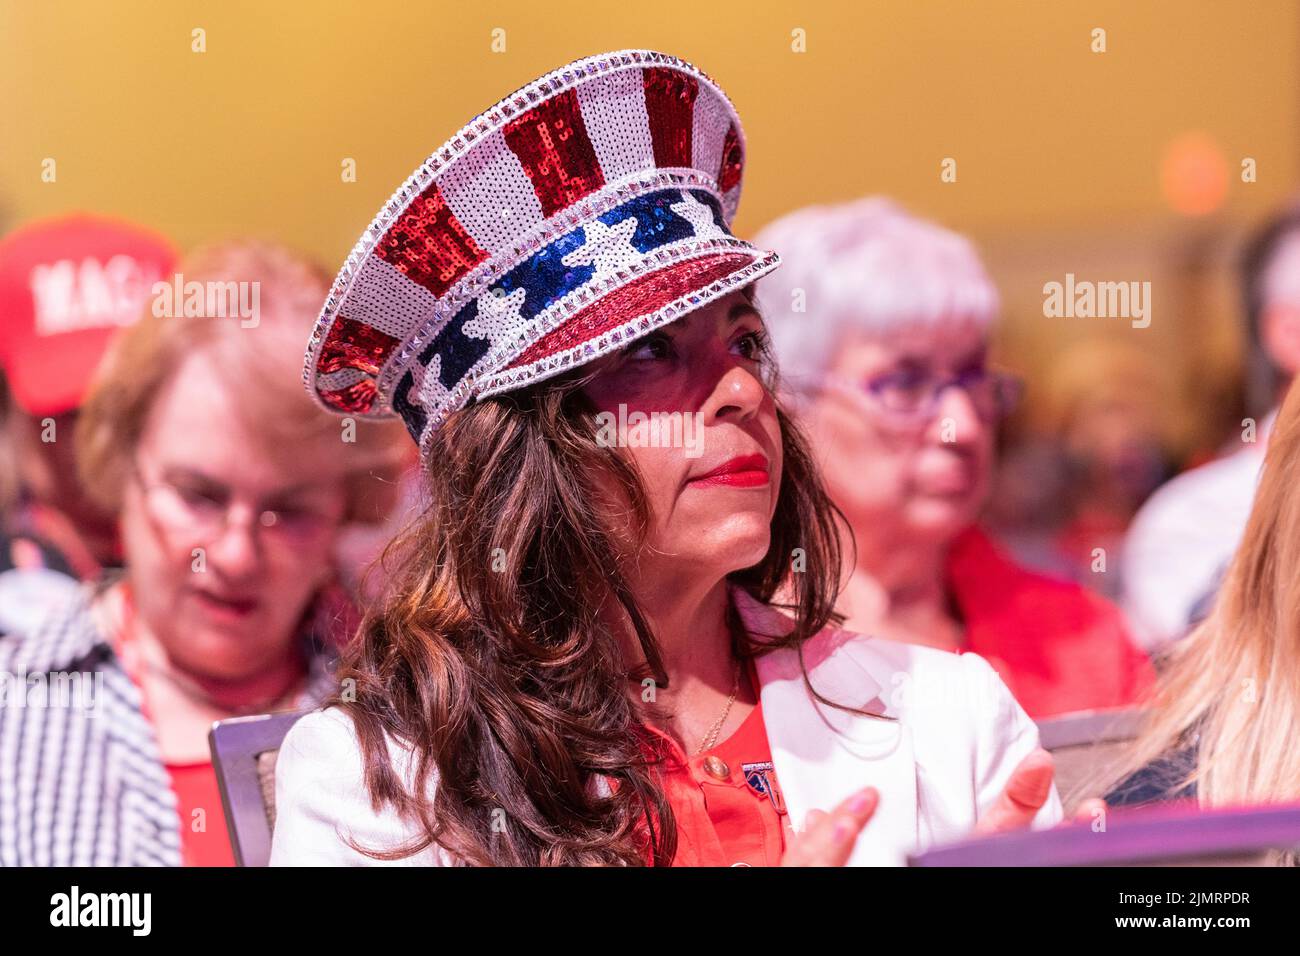 Dallas, TX - 6. August 2022: Eine Frau nimmt an der CPAC Texas 2022 Konferenz im Hilton Anatole Teil Stockfoto